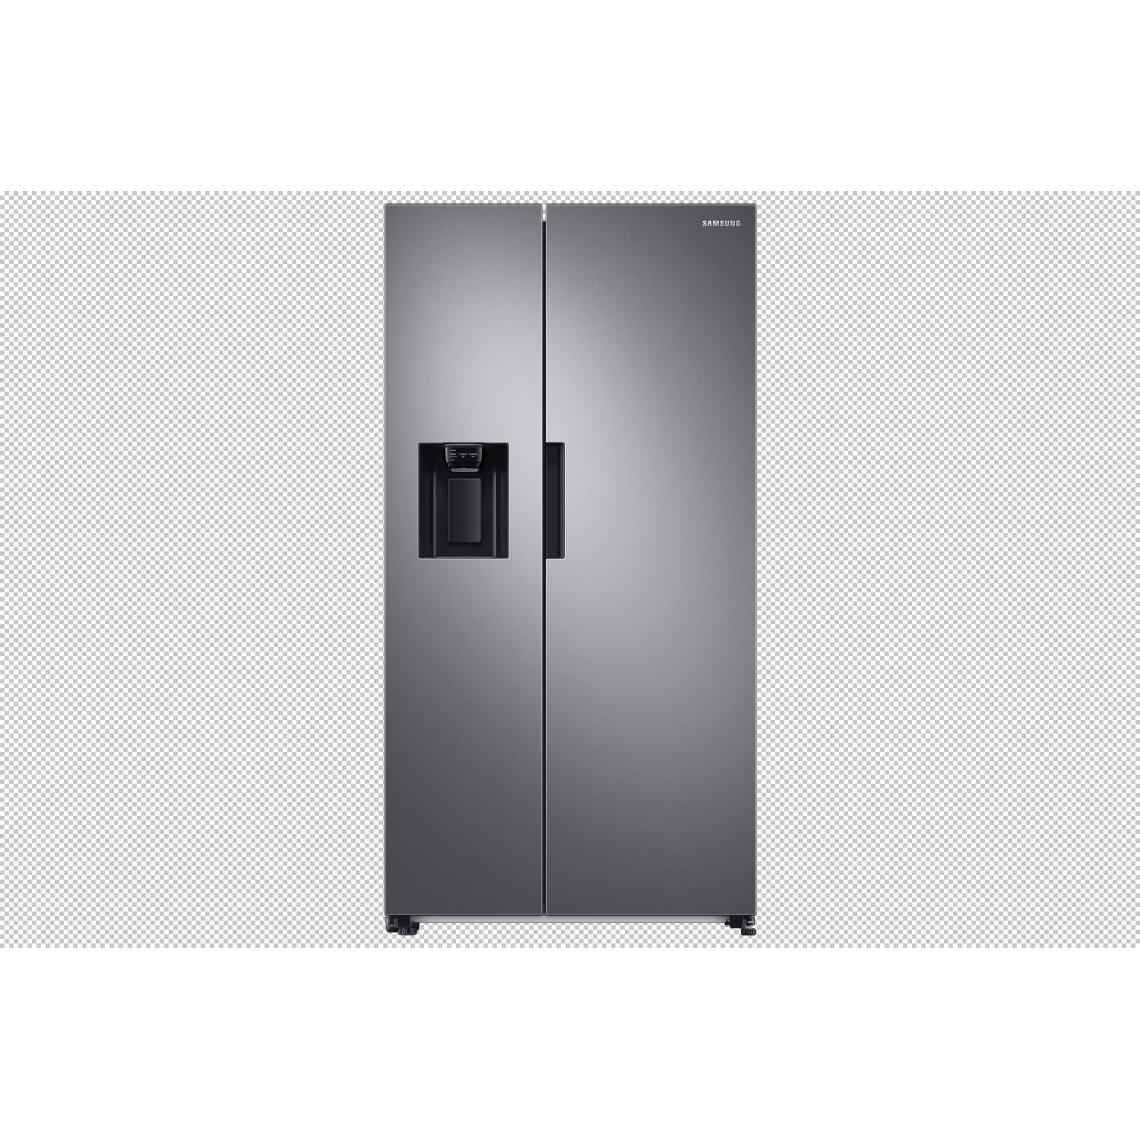 Samsung - Refrigerateur americain Samsung RS67A8810S9 - Réfrigérateur américain